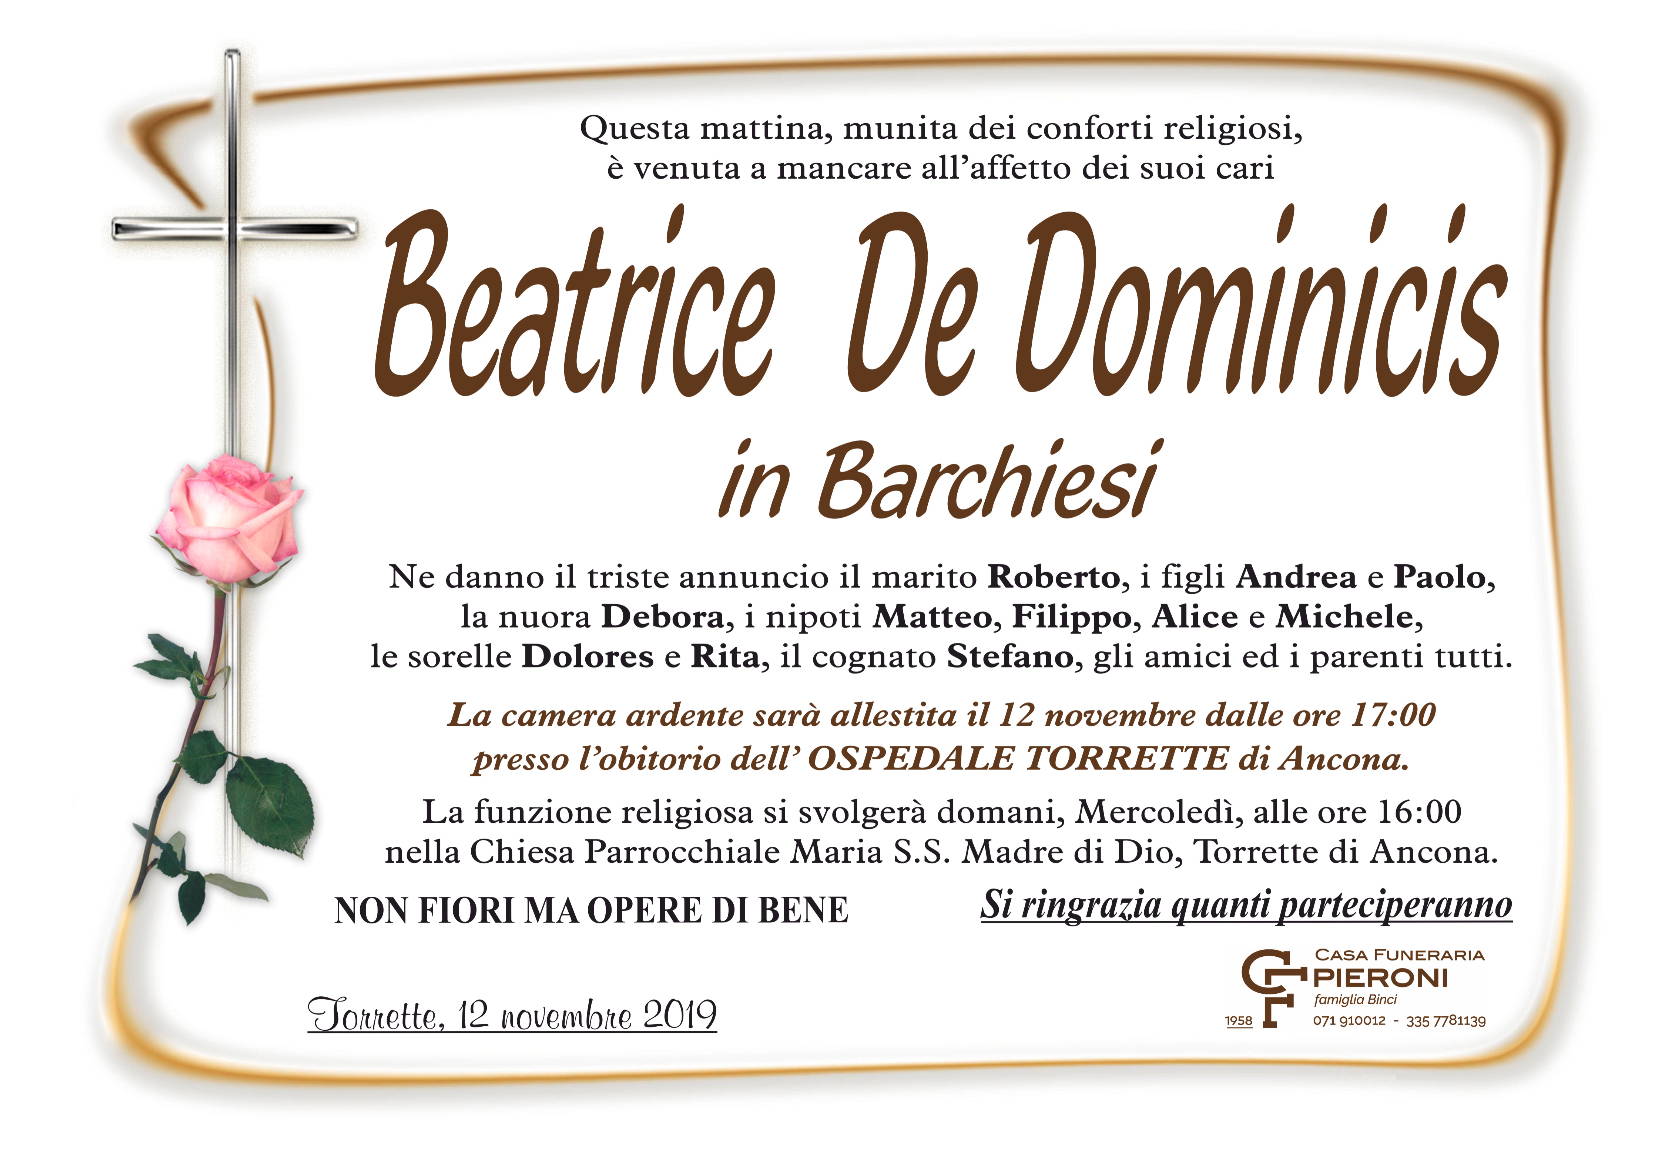 Beatrice De Dominics